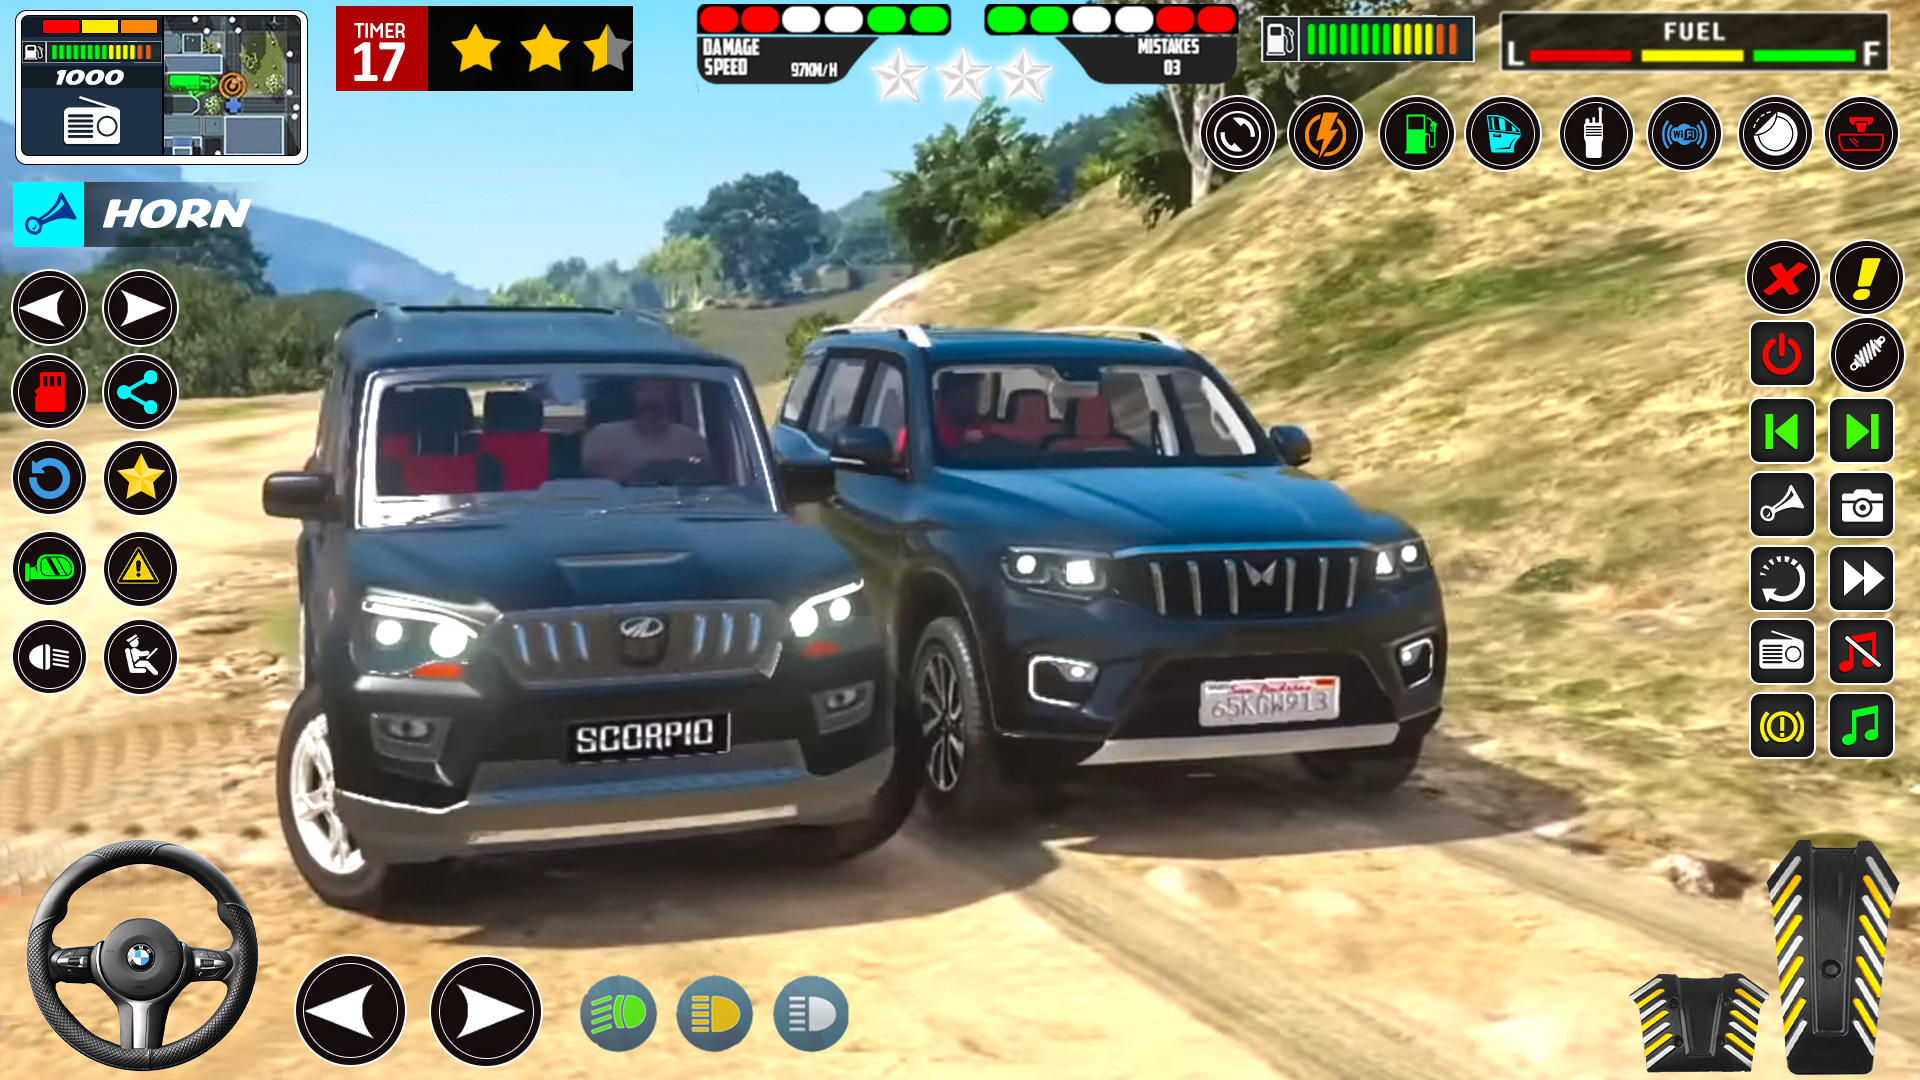 Screenshot 1 of เกมอินเดียนจี๊ป Wala 3D 1.0